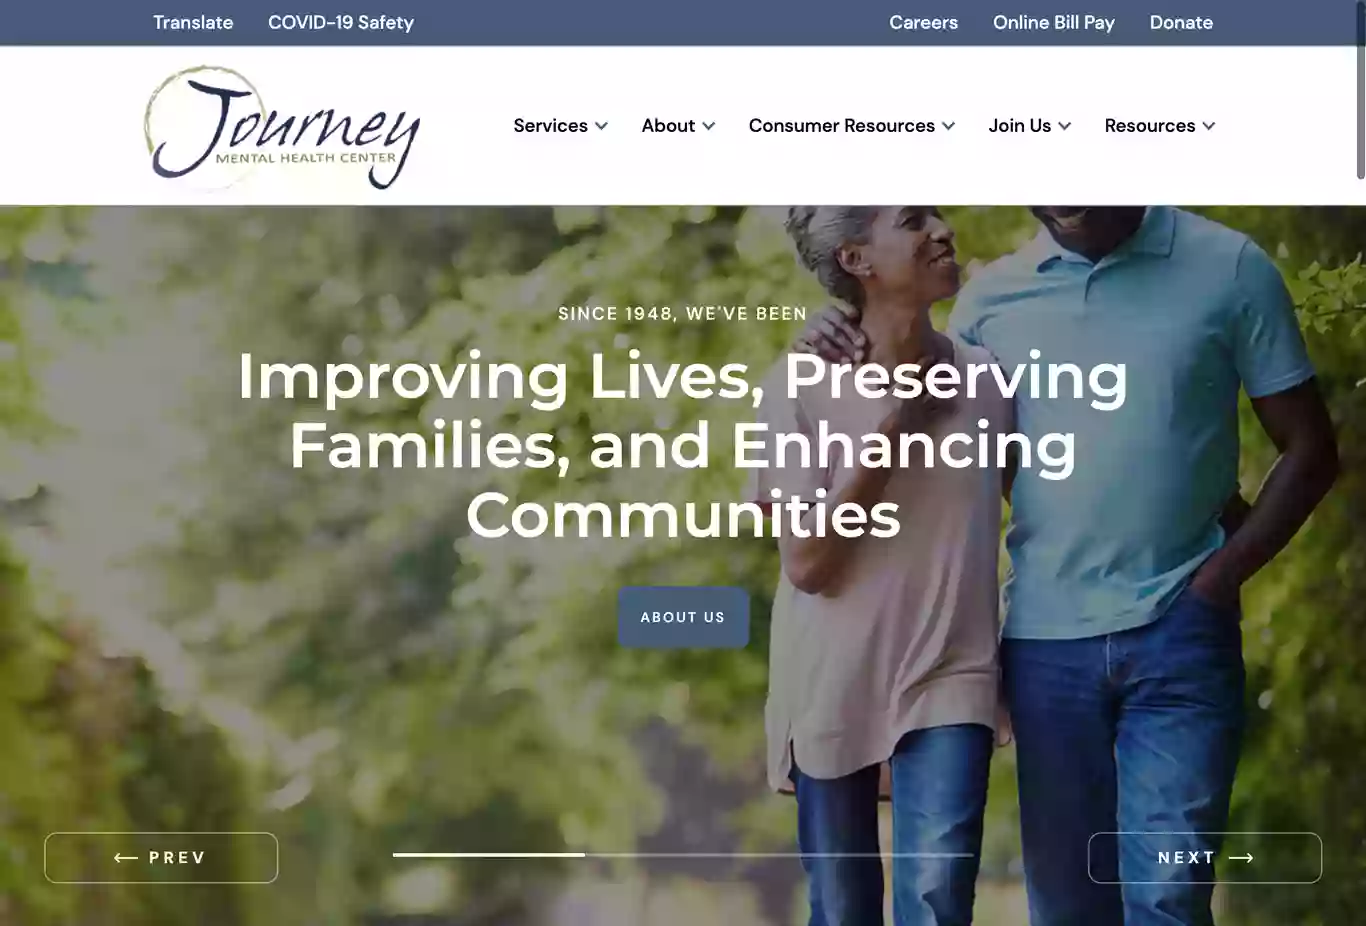 Community Treatment Alternatives, a program of Journey Mental Health Center